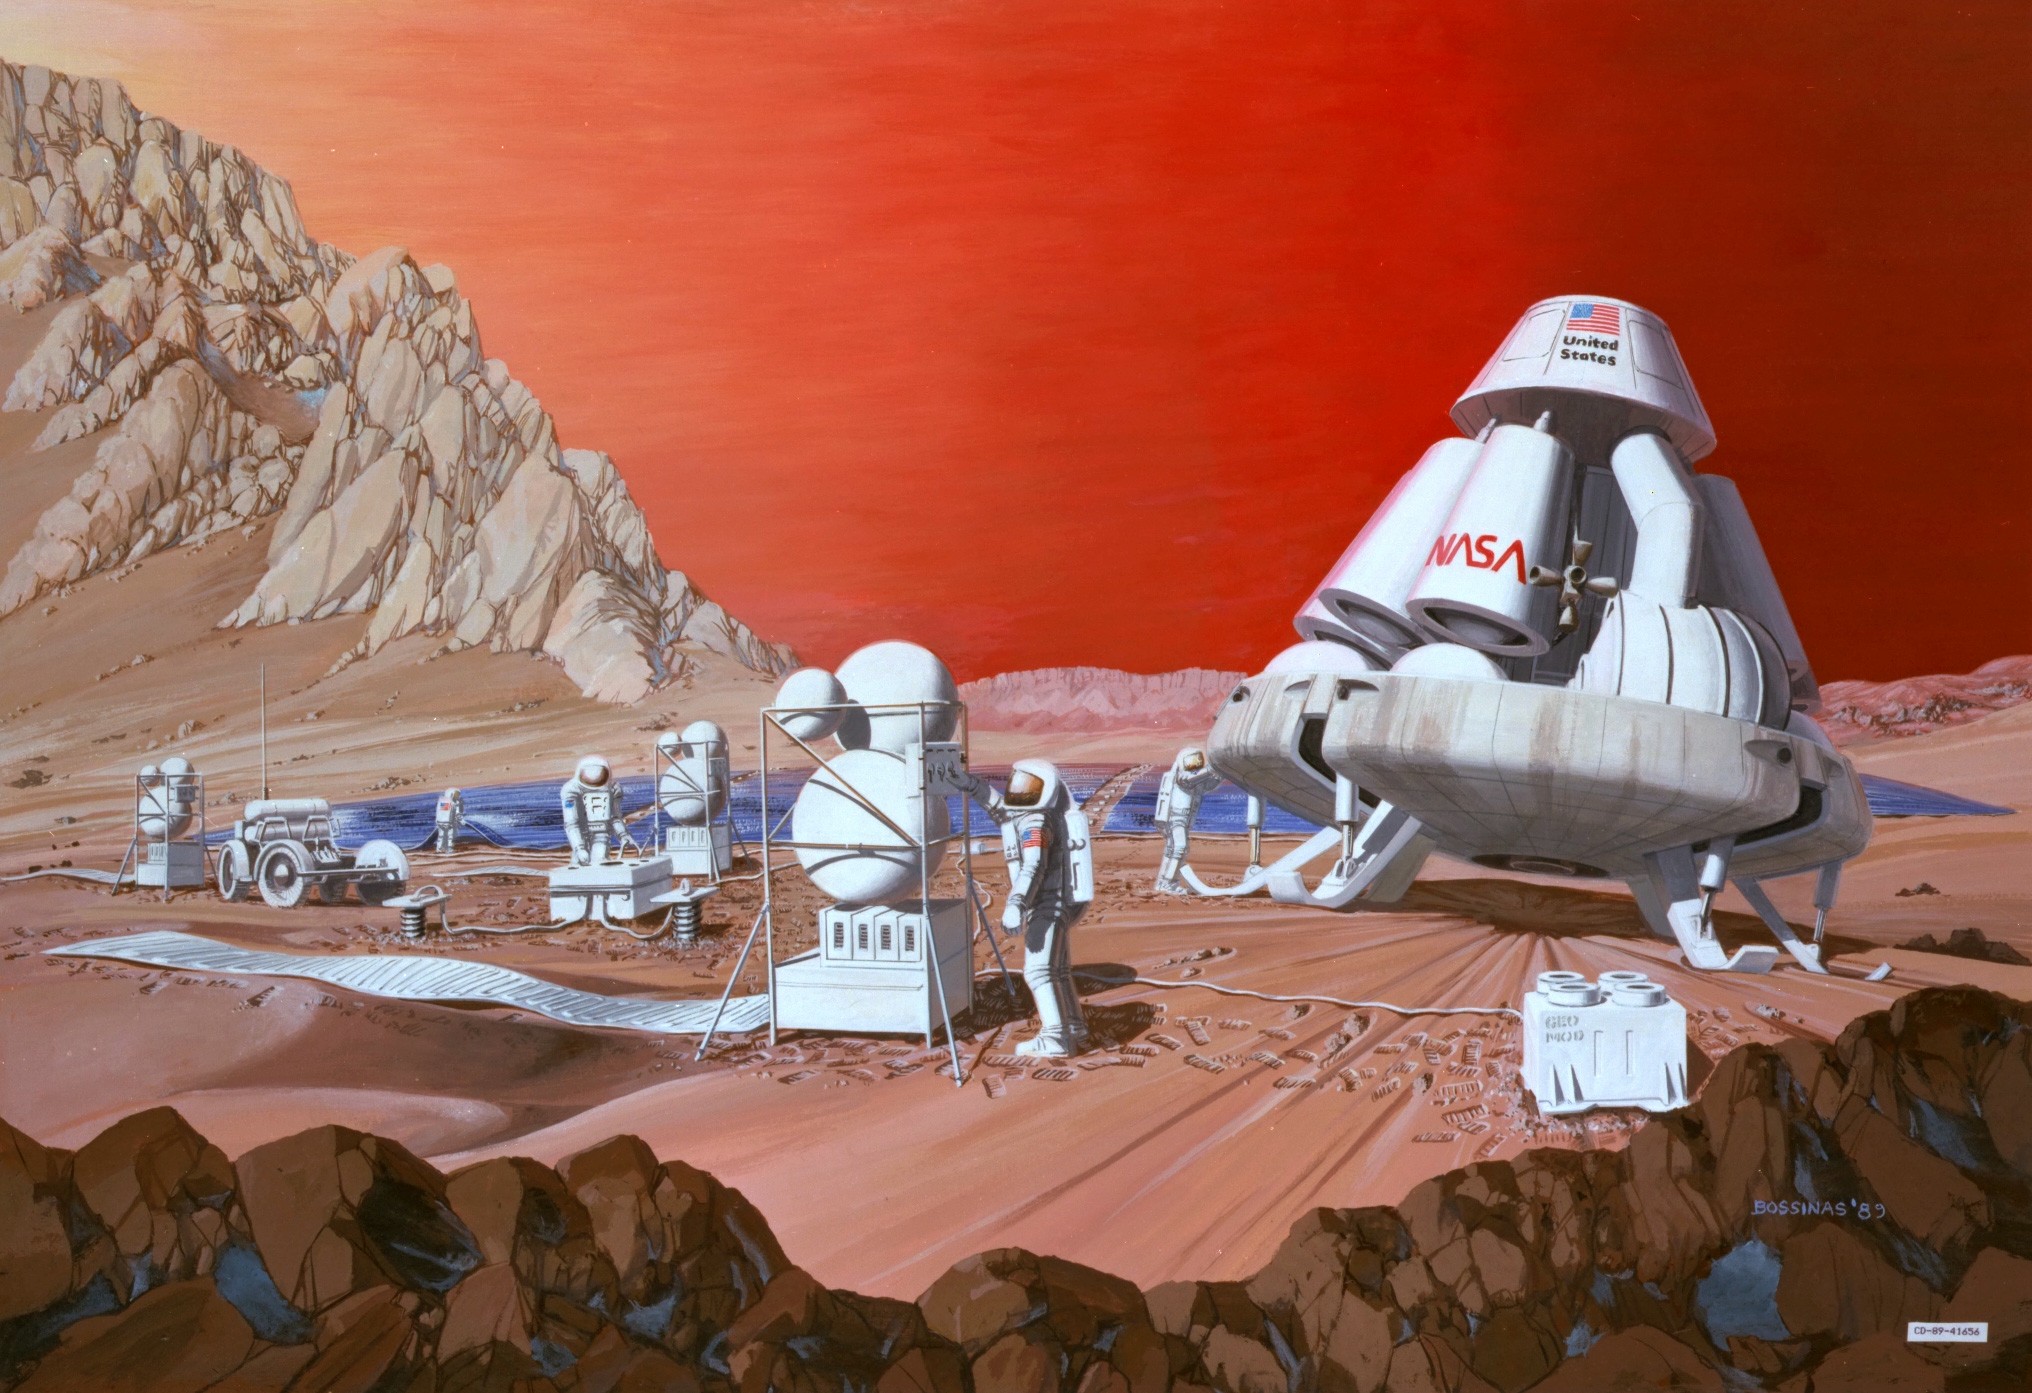 Viaje tripulado a Marte - Wikipedia, la enciclopedia libre